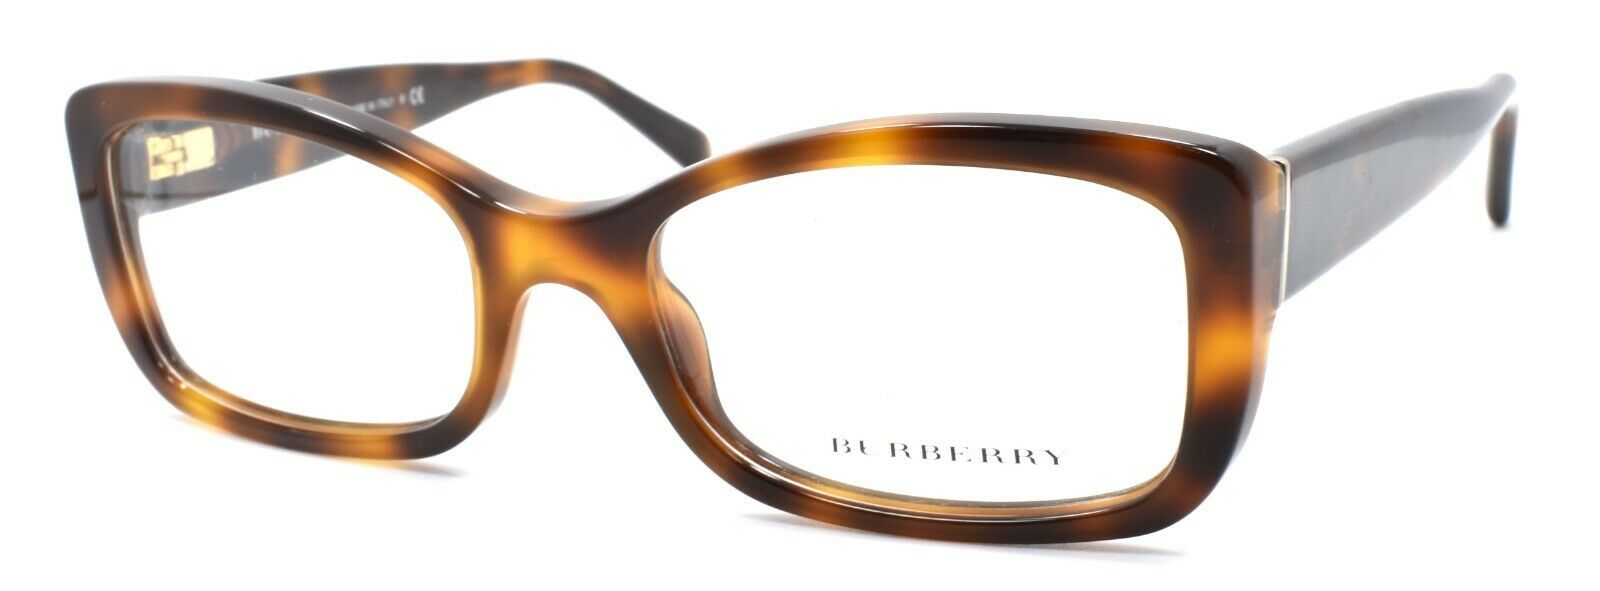 1-Burberry B 2130 3316 Women's Eyeglasses Frames 51-18-135 Brown Tortoise ITALY-713132575635-IKSpecs